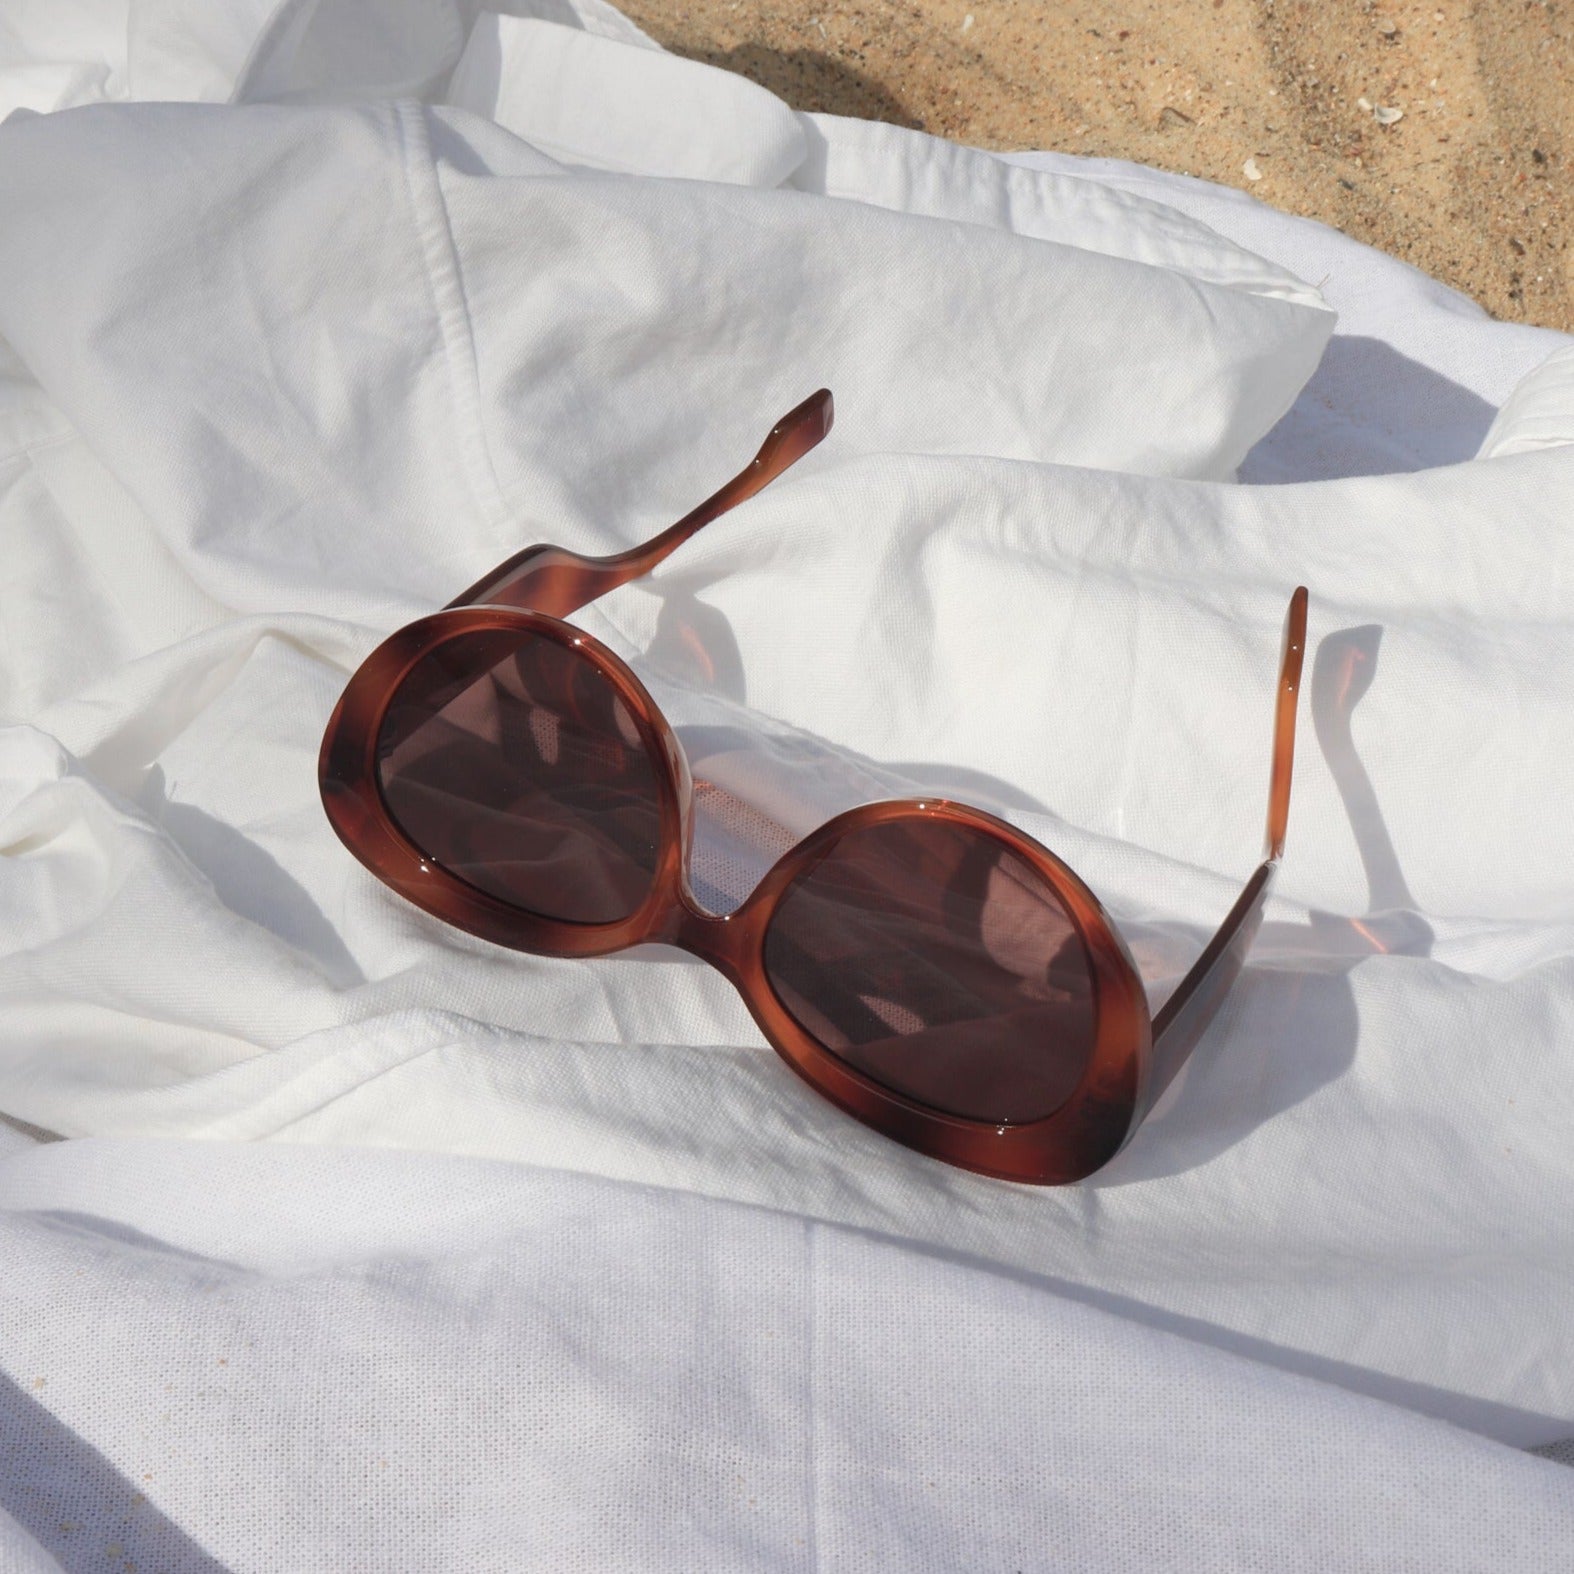 Stylish and Trendy Sunglasses for Men and Women - UV Protection polarised Eyewear for Fashion Enthusiasts